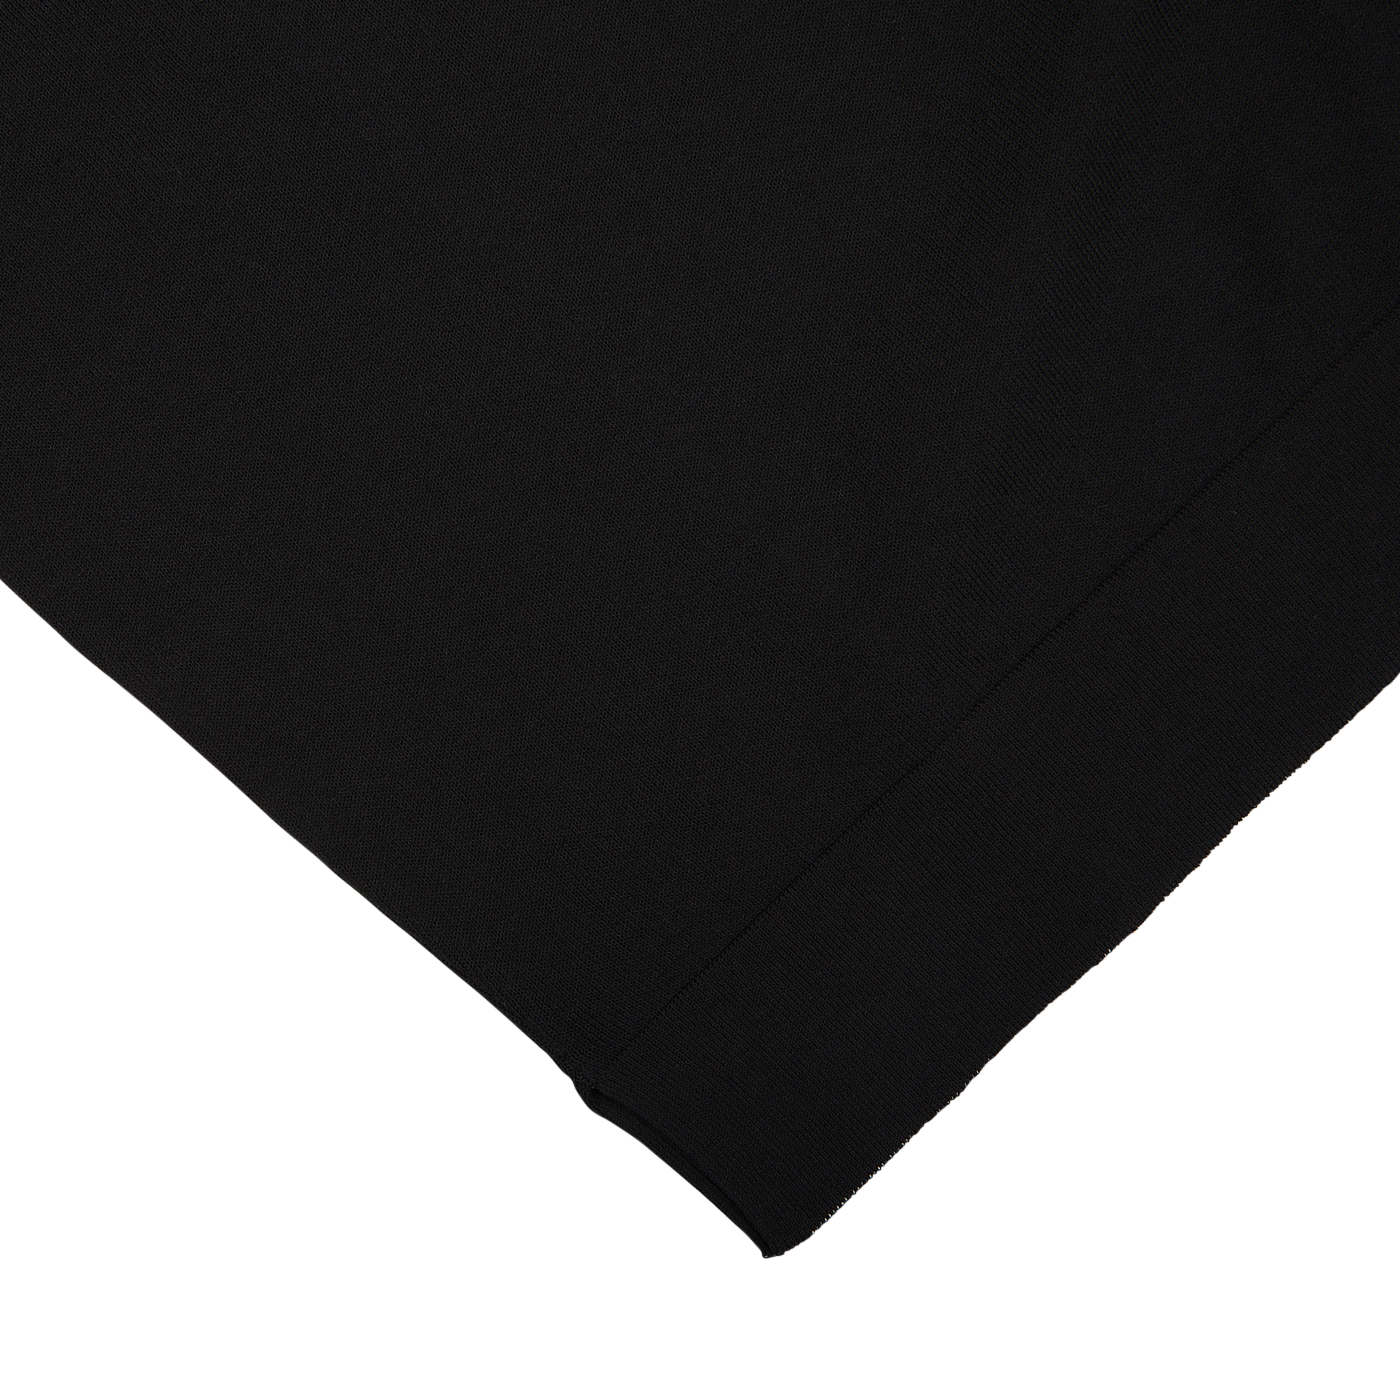 A Black Crepe Cotton Oversized T-Shirt by Filippo de Laurentiis on a white surface.